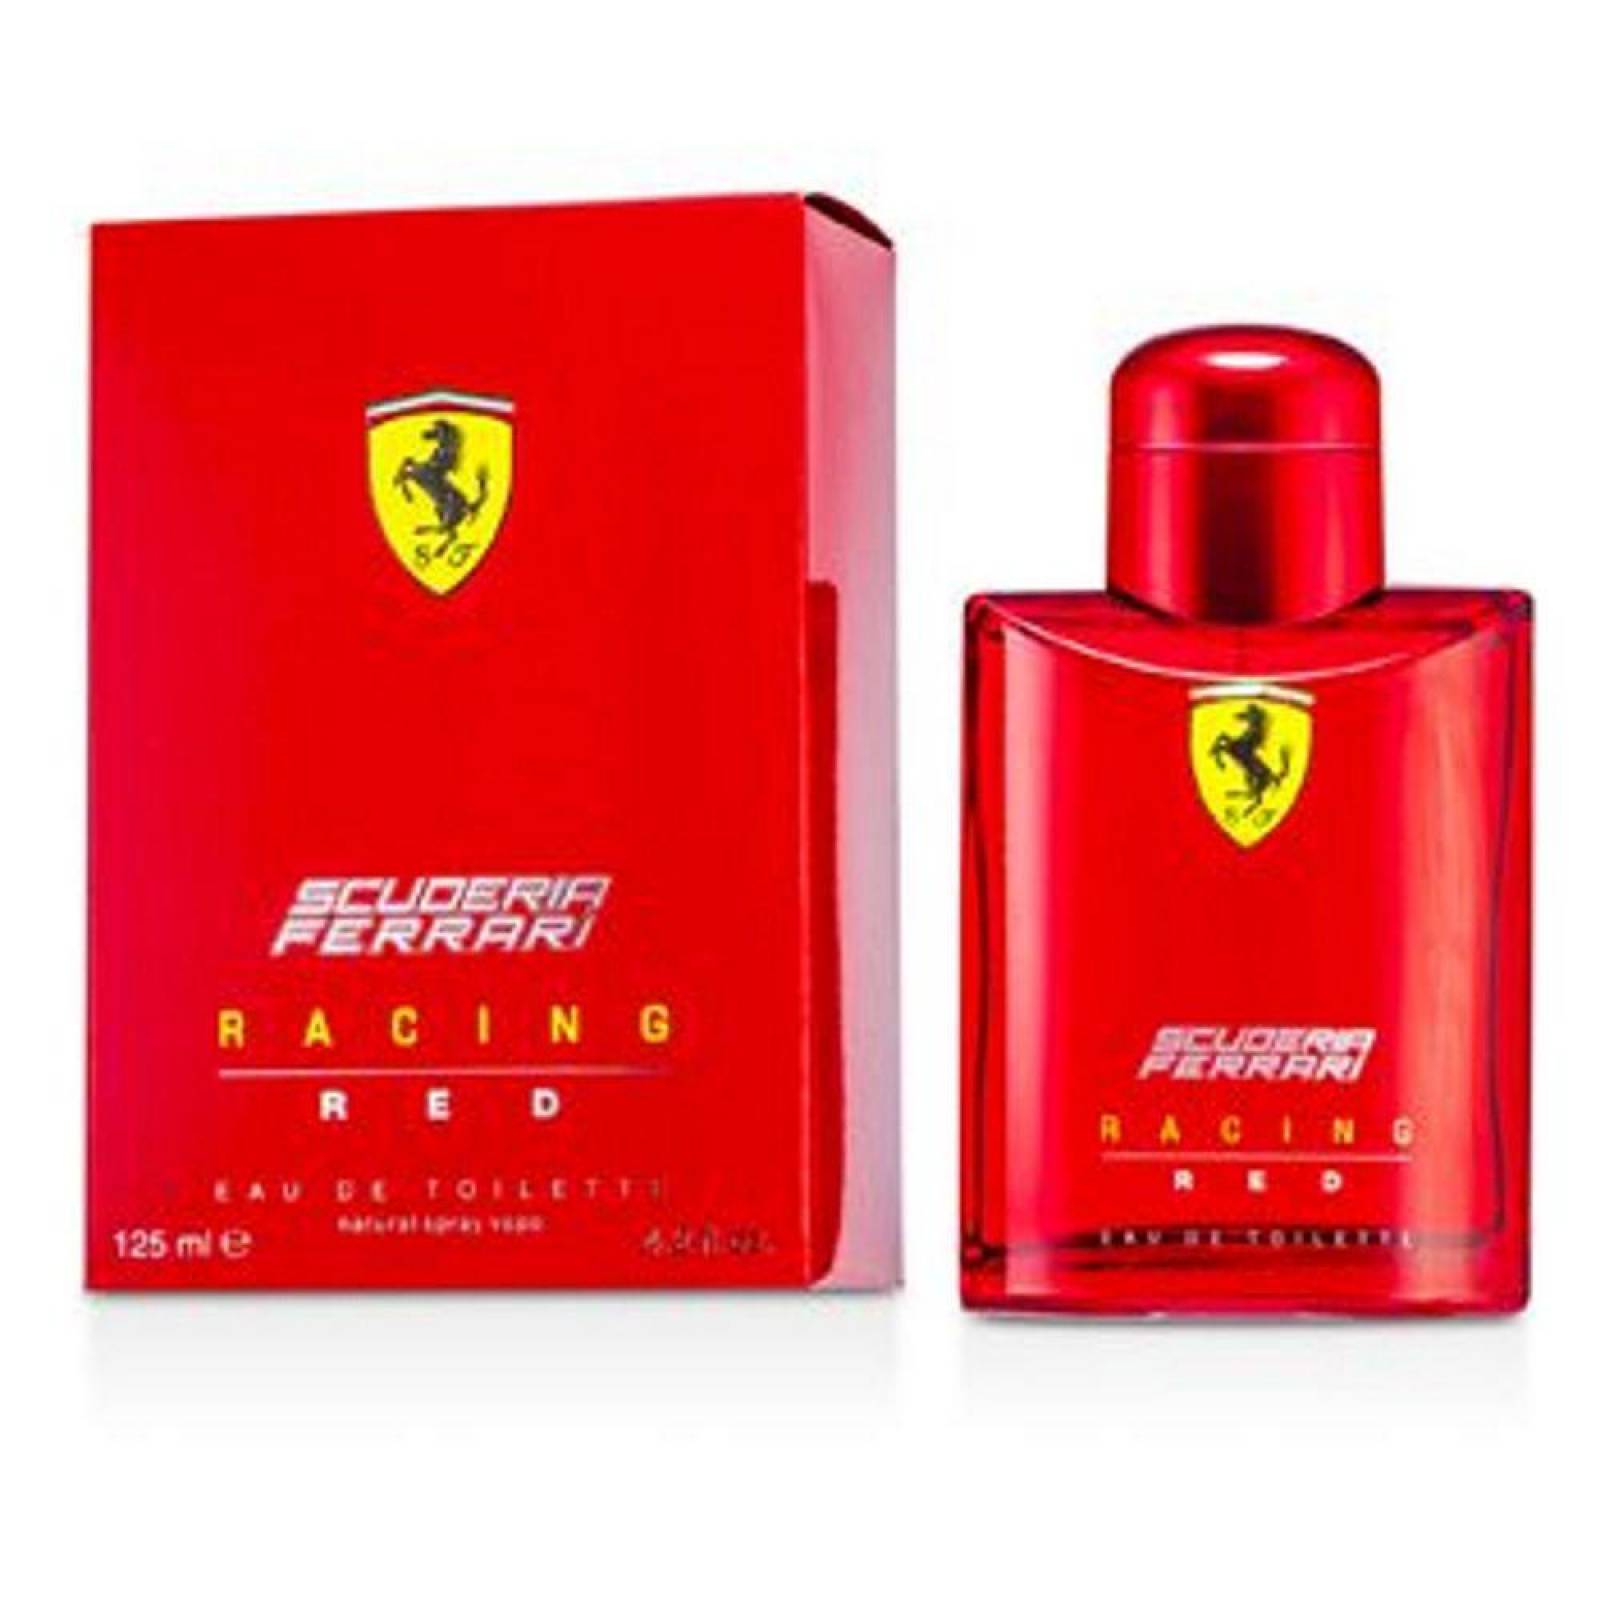 Racing Red de Ferrari caballero de 125 ml